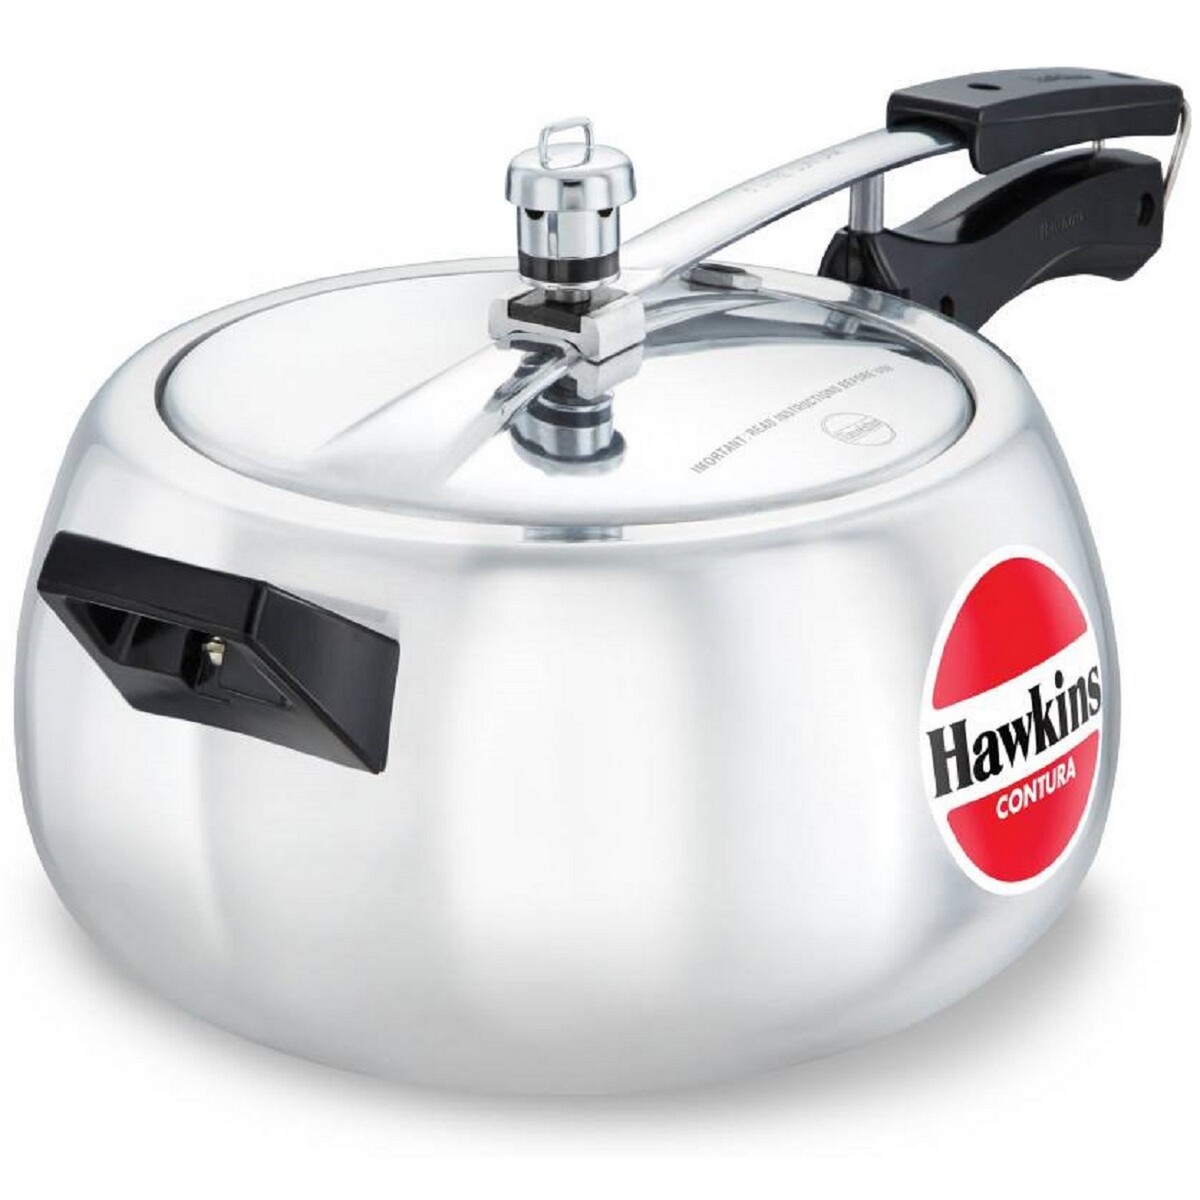 Hawkins Pressure Cooker Contura HC50 5 Ltr